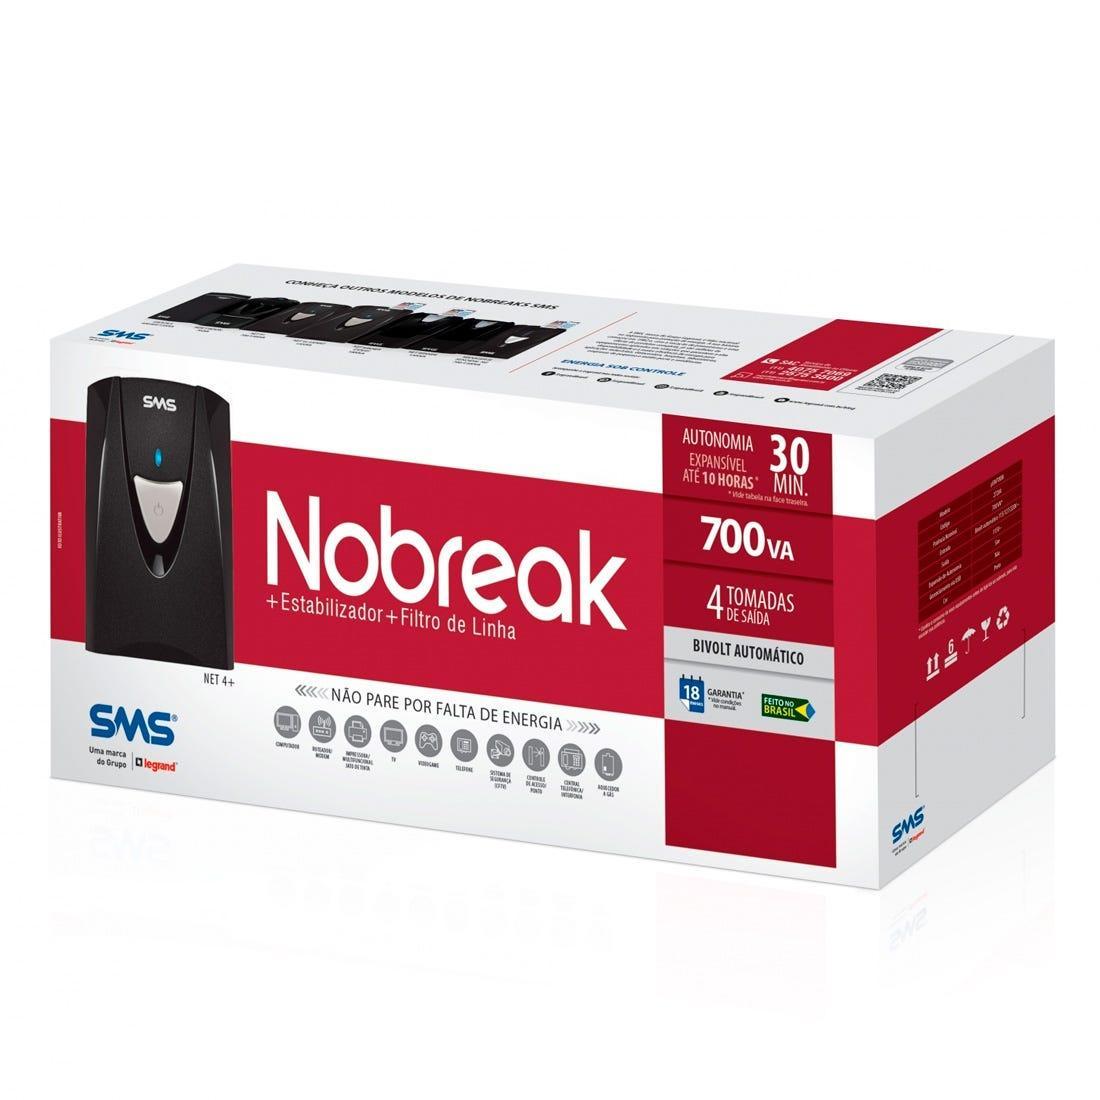 Nobreak SMS Manager NET4+ 700VA Bi-115 Black 27284 - Mega Market